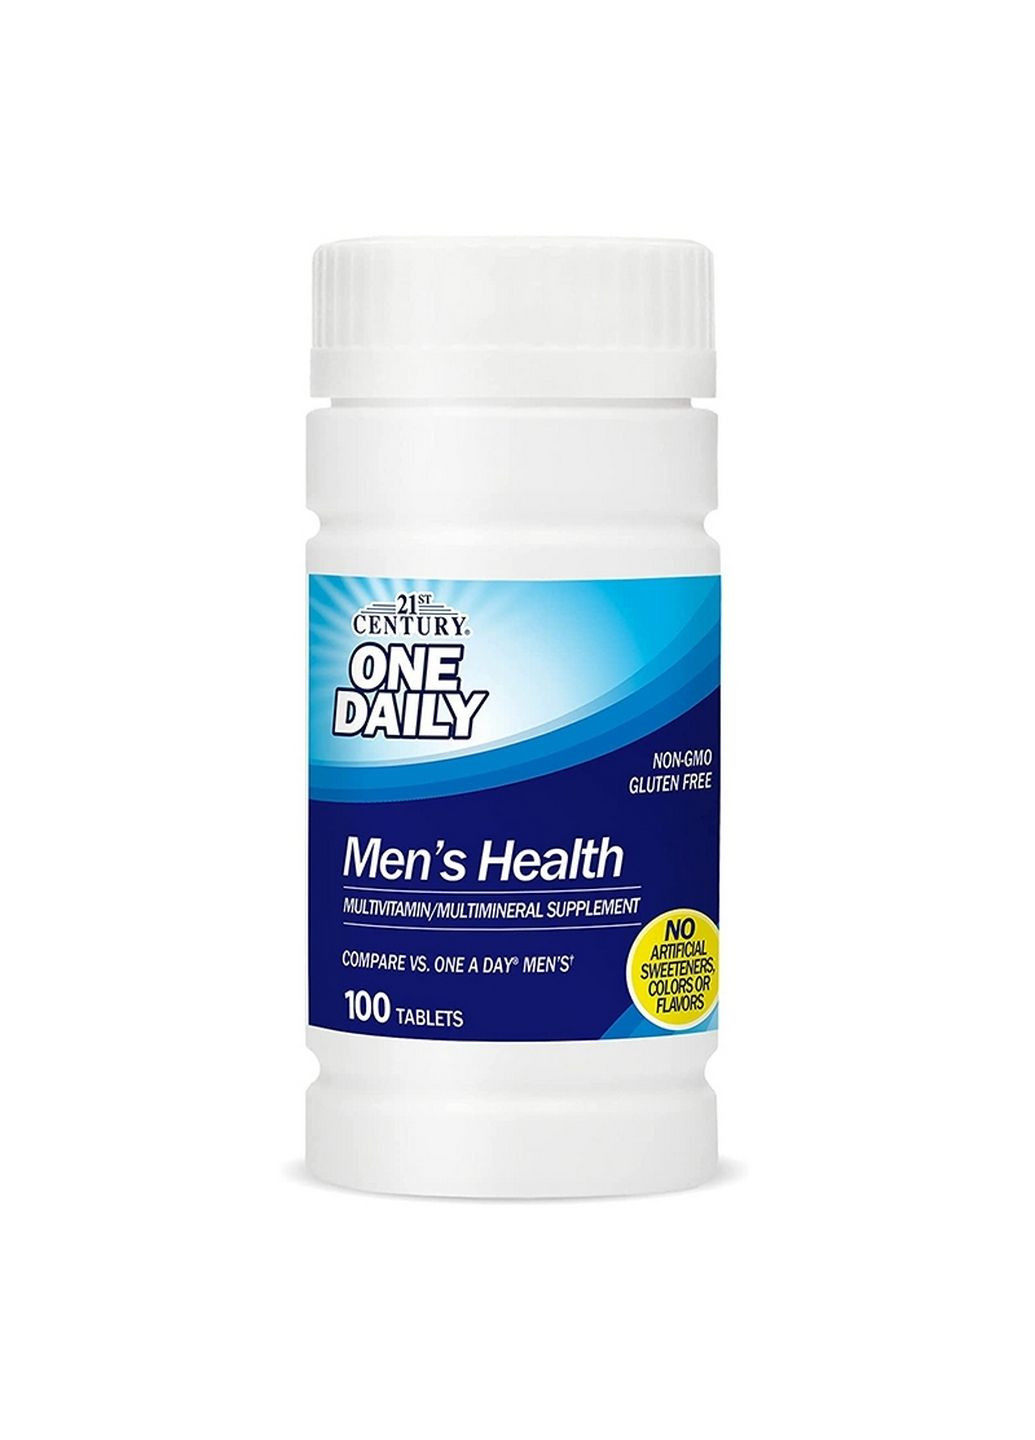 Витамины и минералы One Daily Men's Health, 100 таблеток 21st Century (294926031)